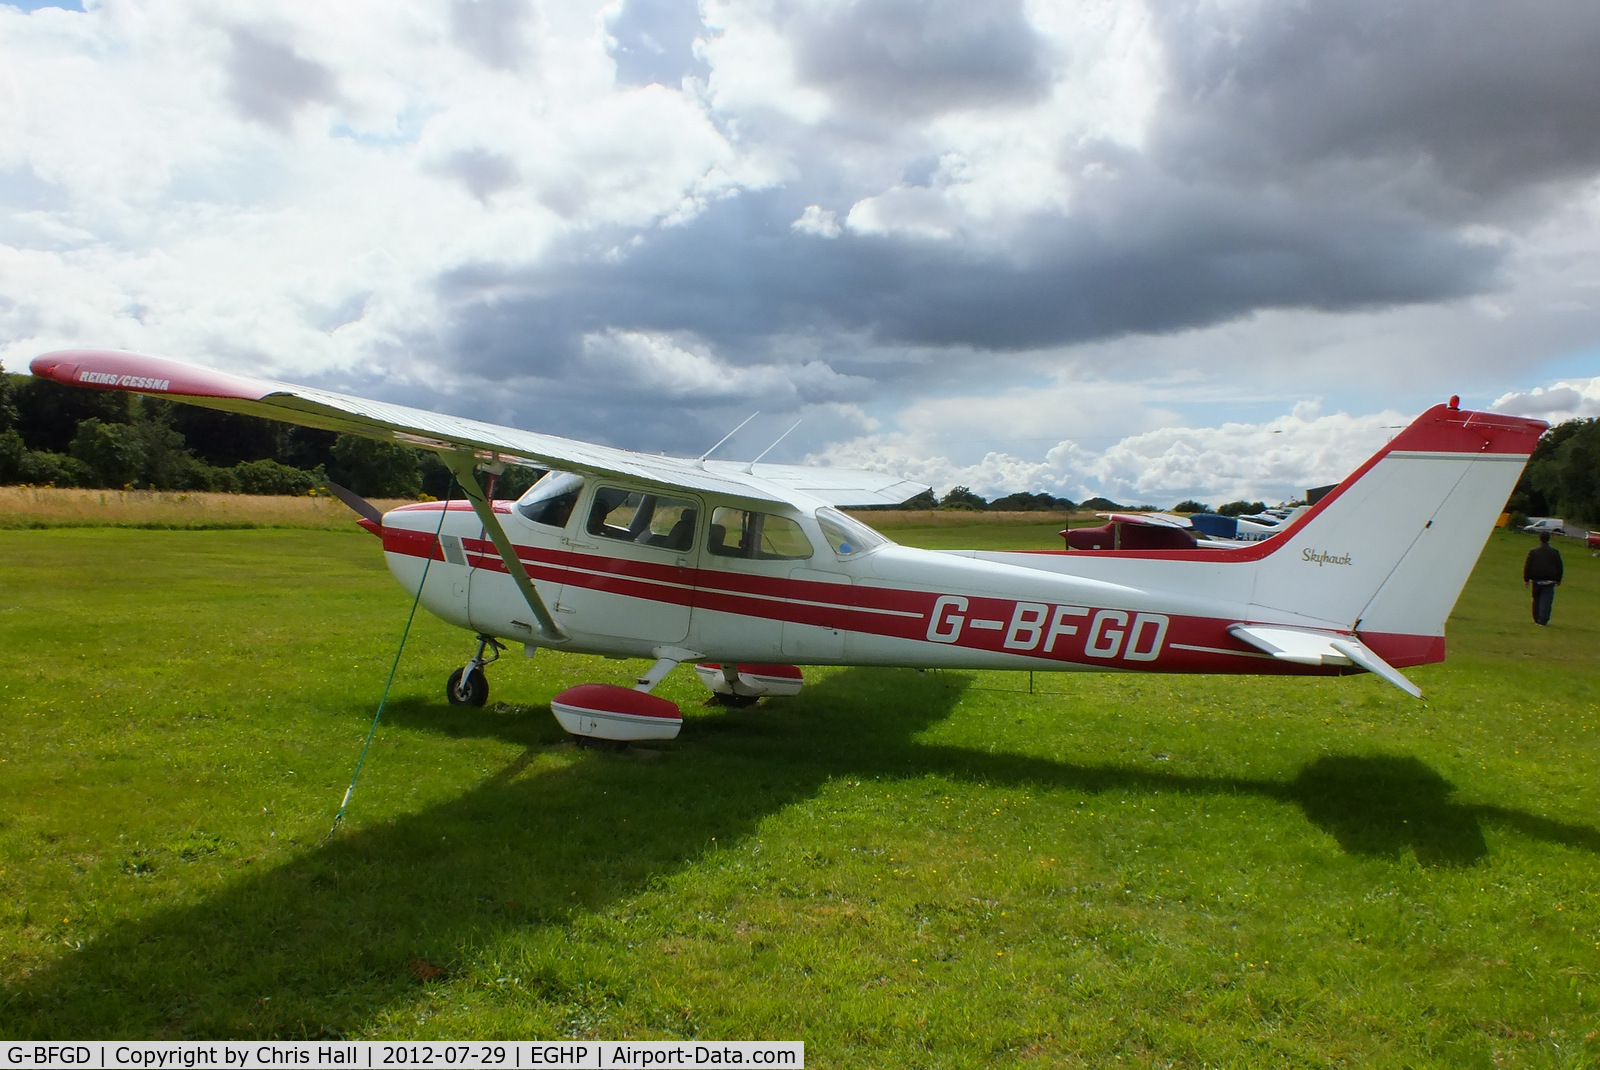 G-BFGD, 1977 Reims F172N Skyhawk C/N 1545, at Popham Airfield, Hampshire